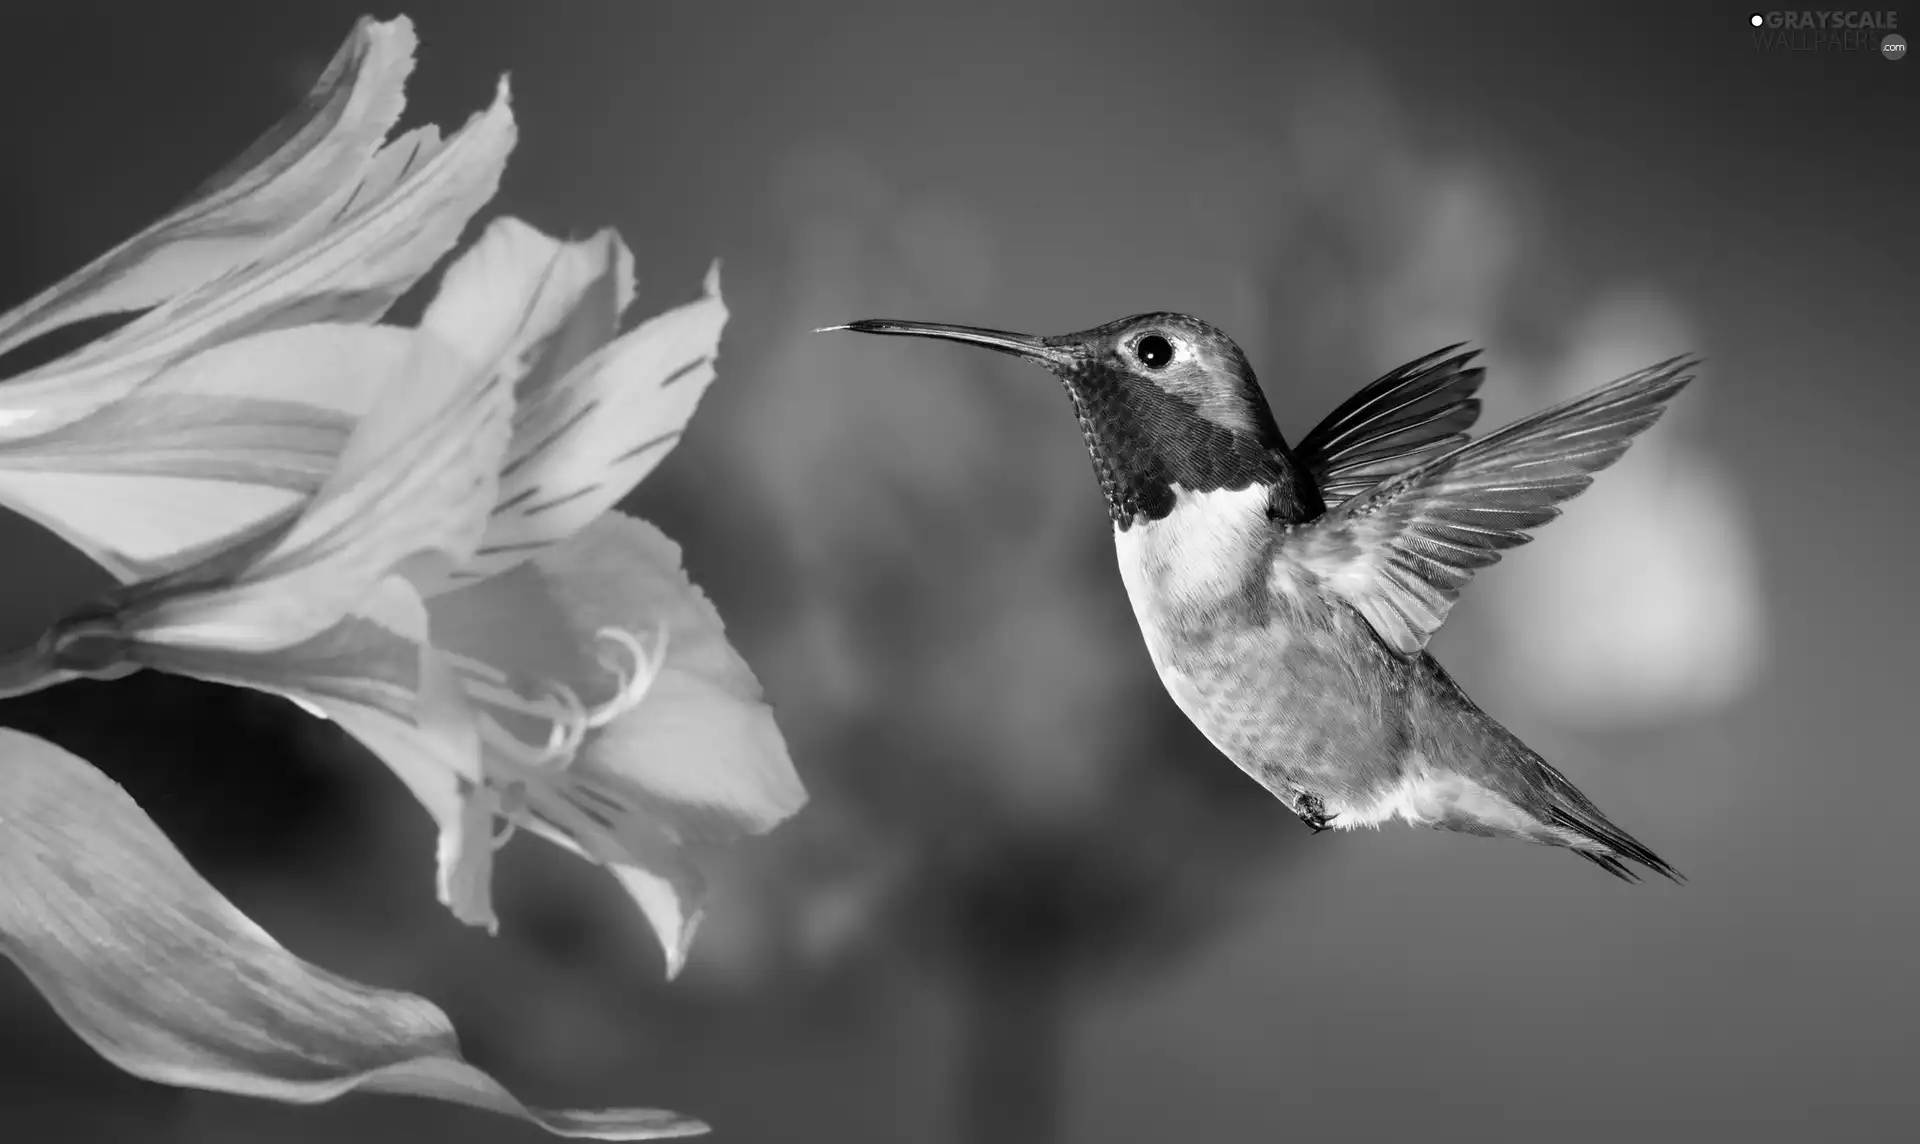 humming-bird, Flowers, Alstroemeria, Bird